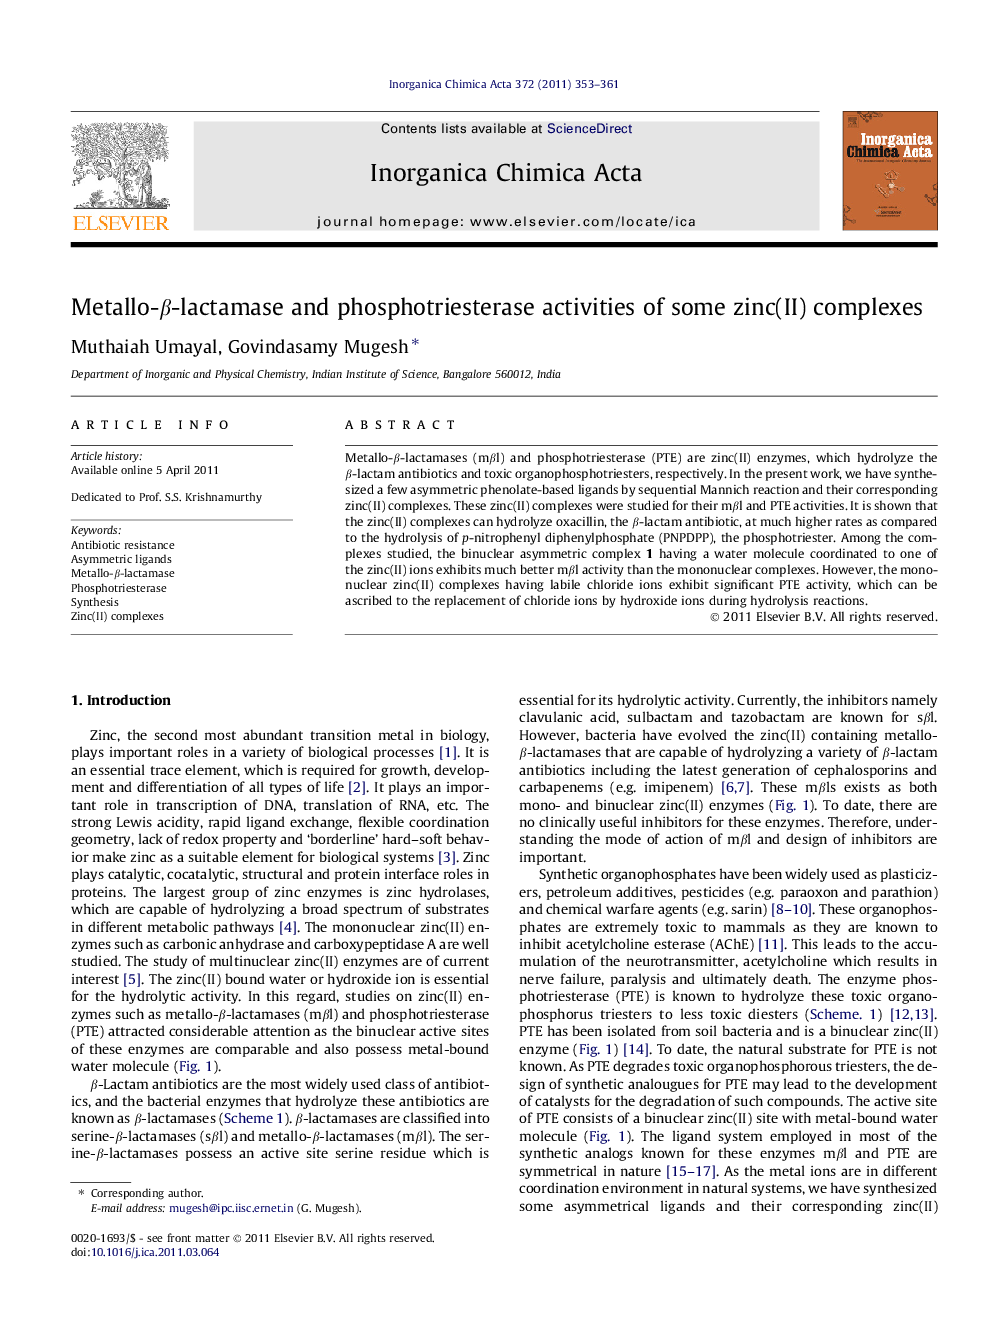 Metallo-β-lactamase and phosphotriesterase activities of some zinc(II) complexes